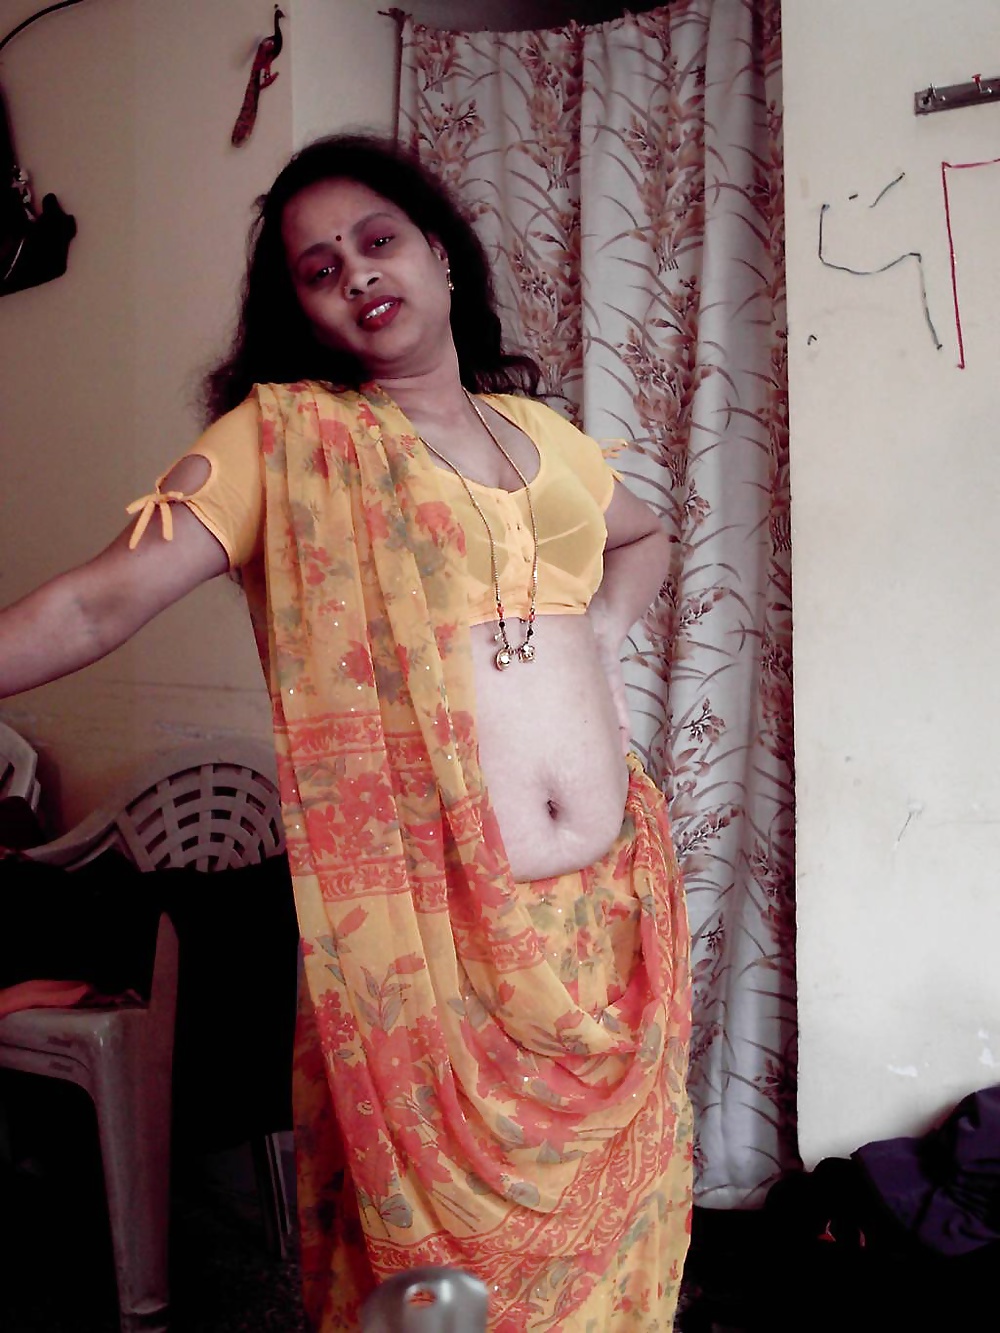 Set porno indiano kavita bhabhi-indiano desi 7.4
 #31020000